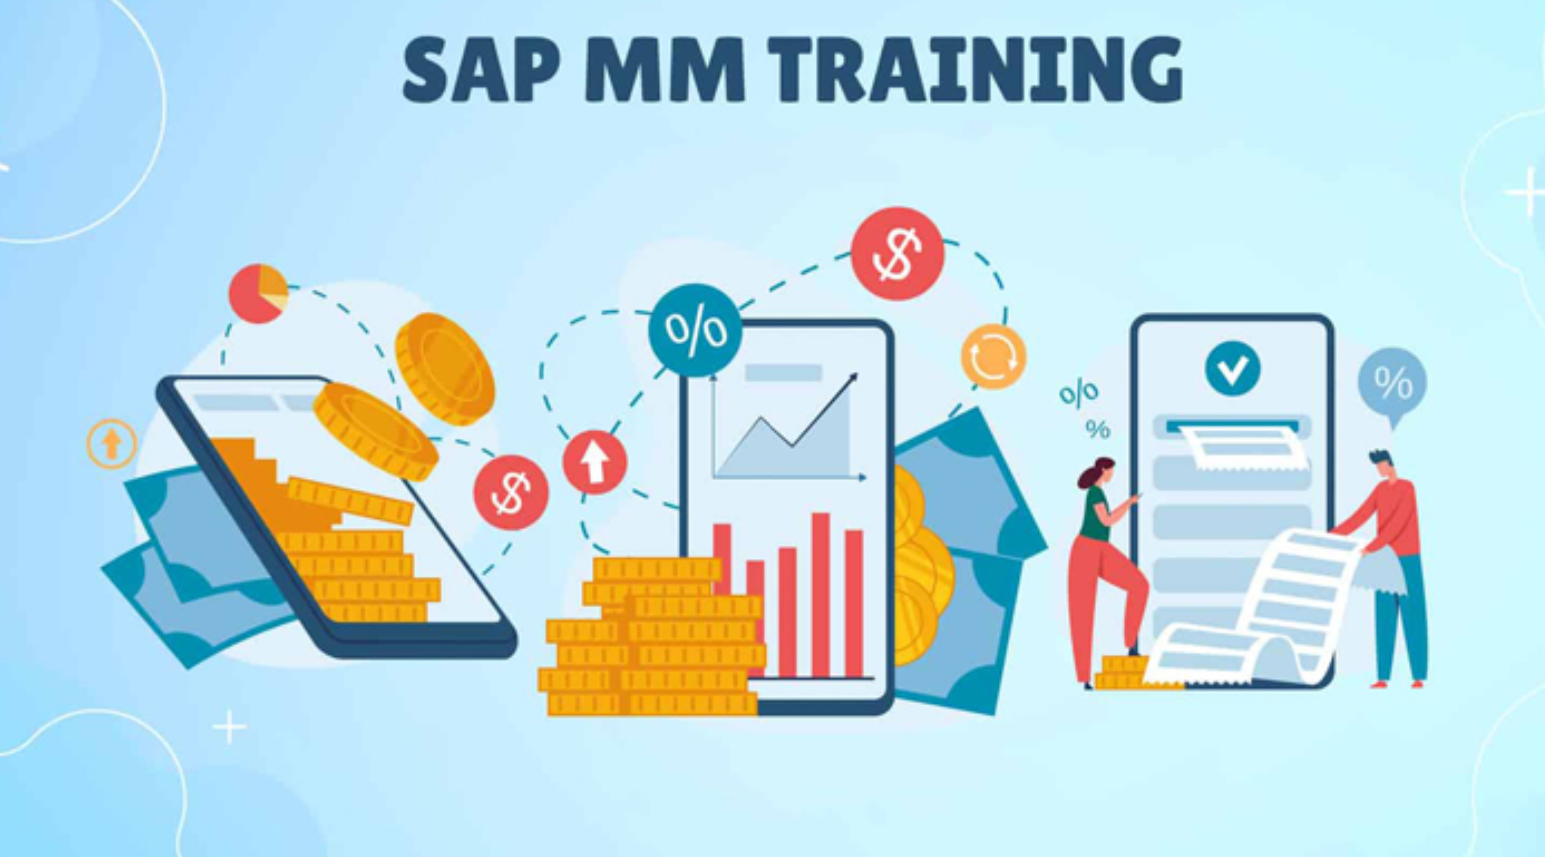 SAP MM Training Image